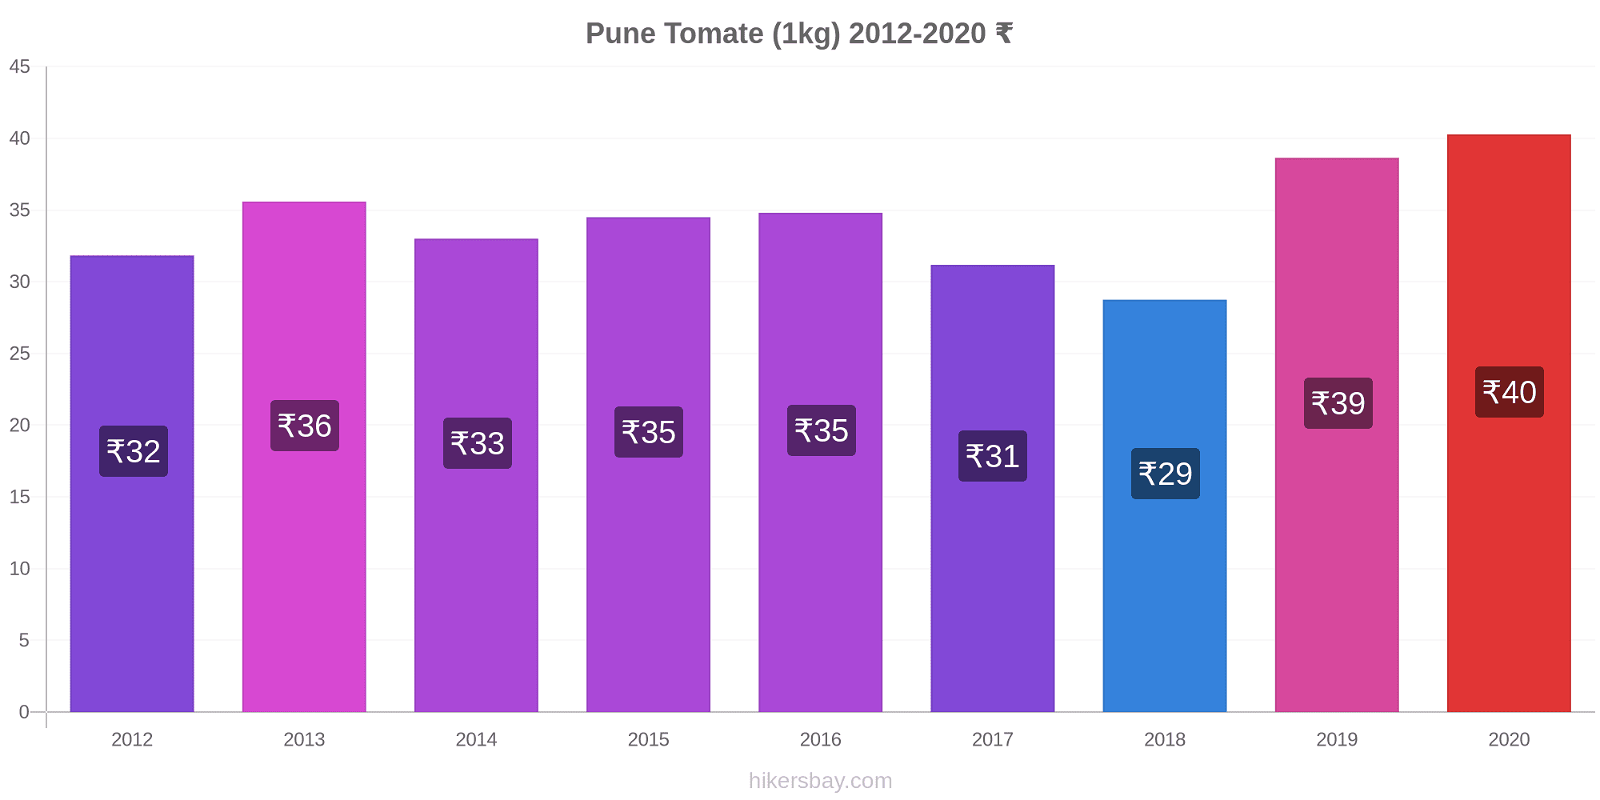 Pune changements de prix Tomate (1kg) hikersbay.com